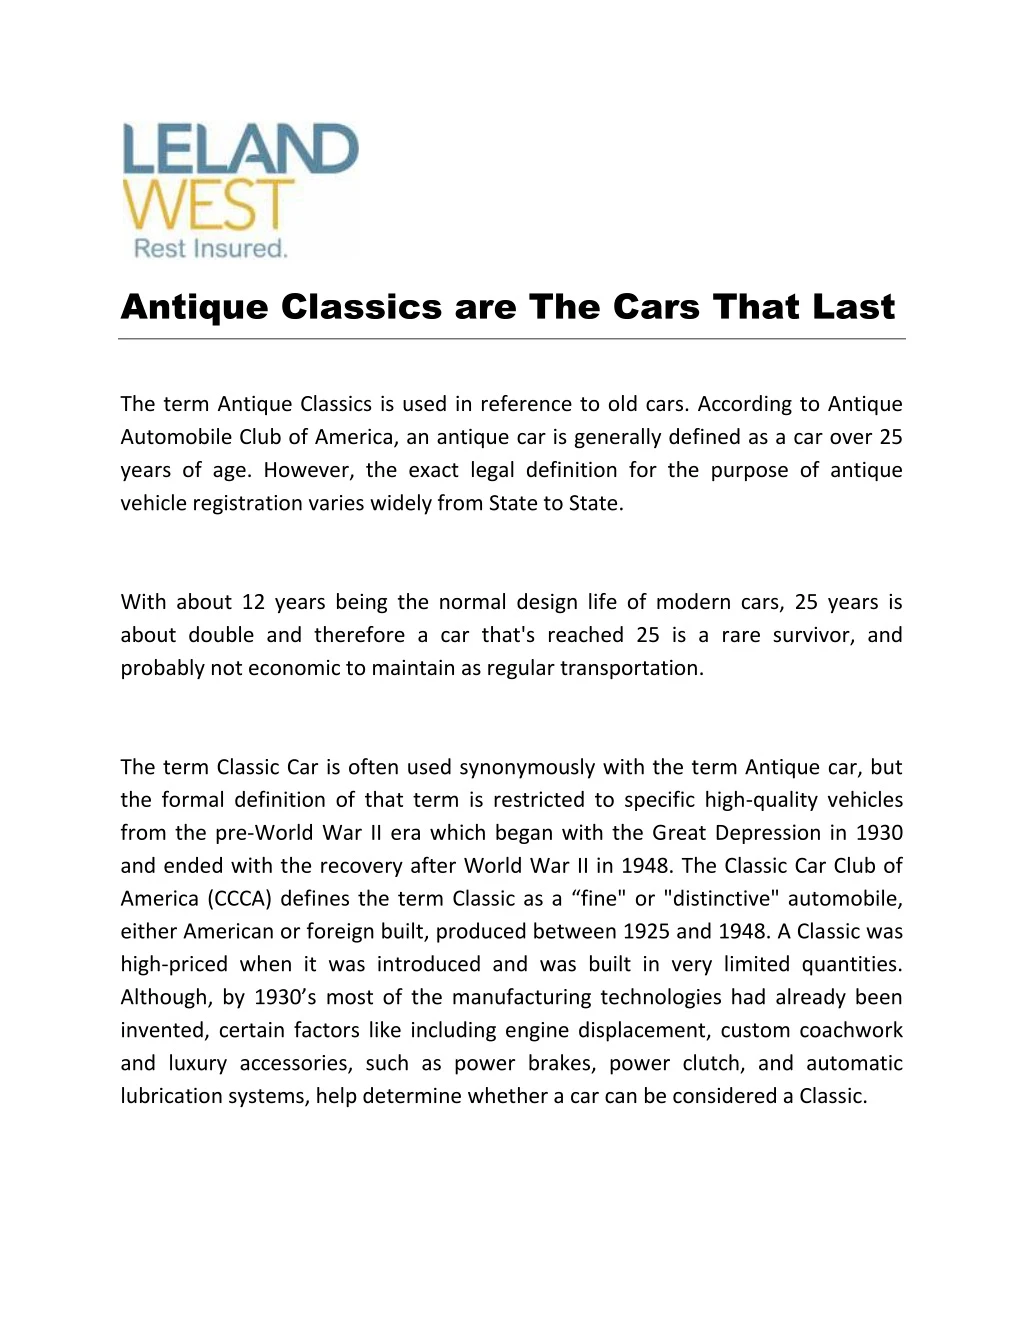 antique classics are the cars that last